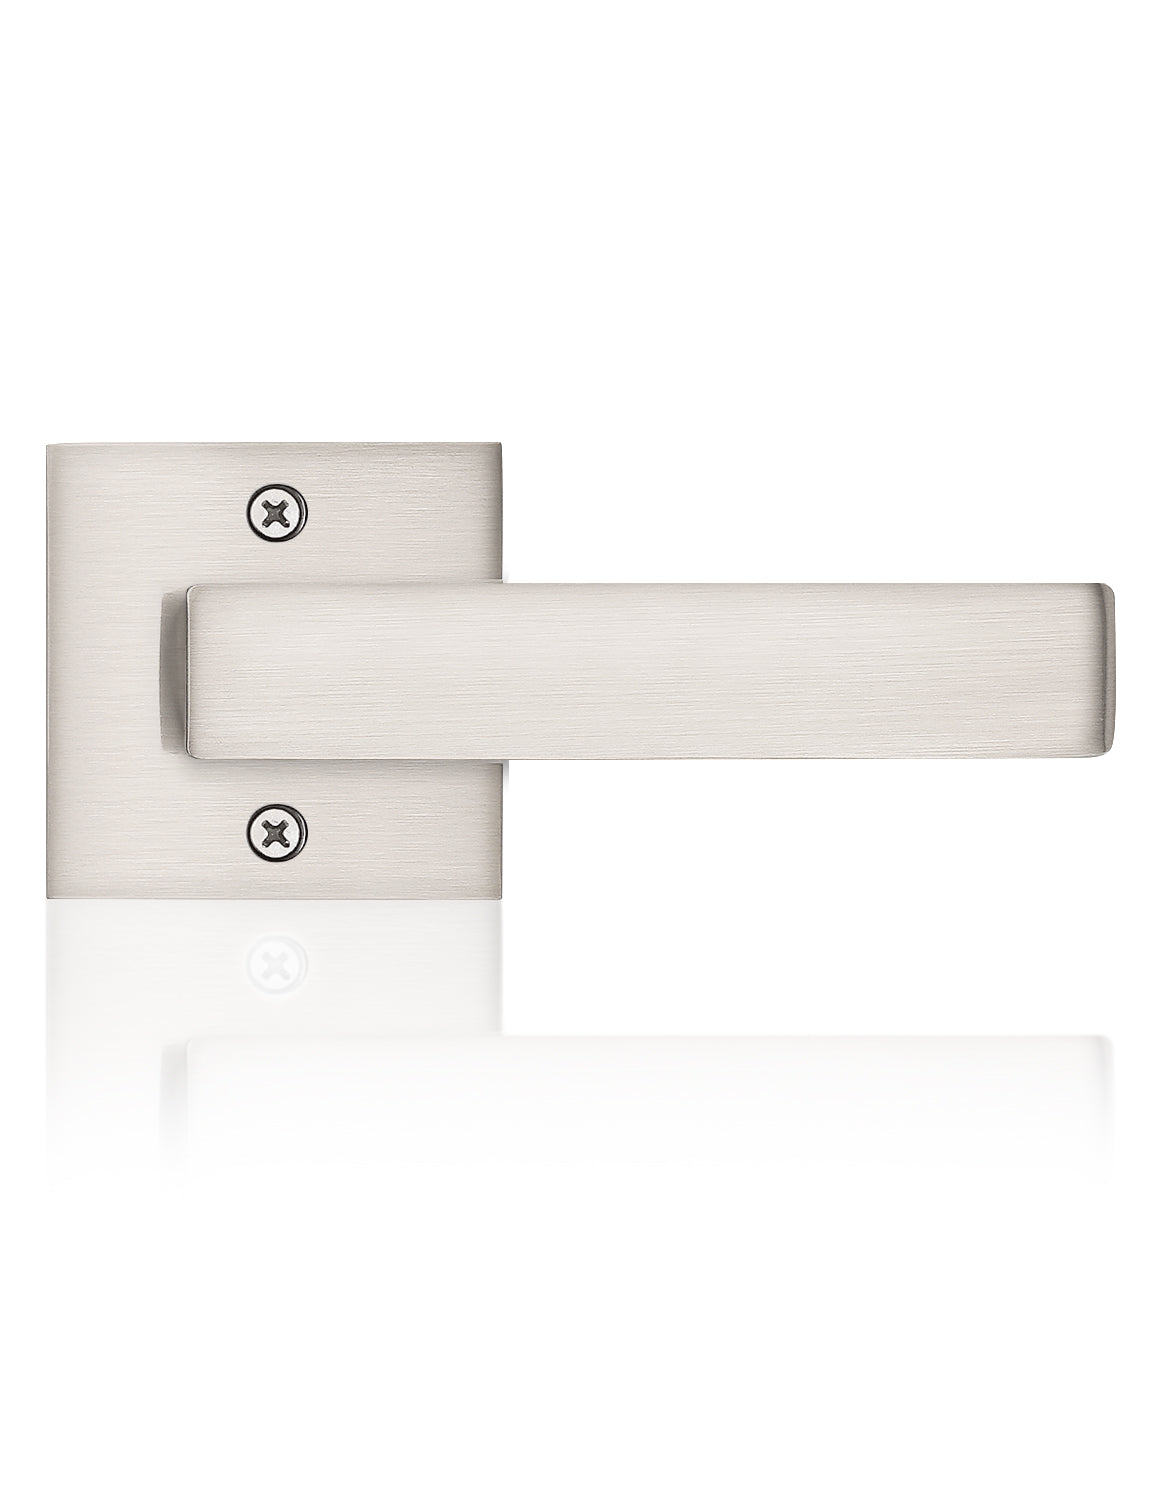 Tinewa 1 Pack Satin Nickel Keyless Square Levers Handles, Interior Dummy Door Locksets for Hall Closet Door Knobs Lock Reversible Right & Left Handed